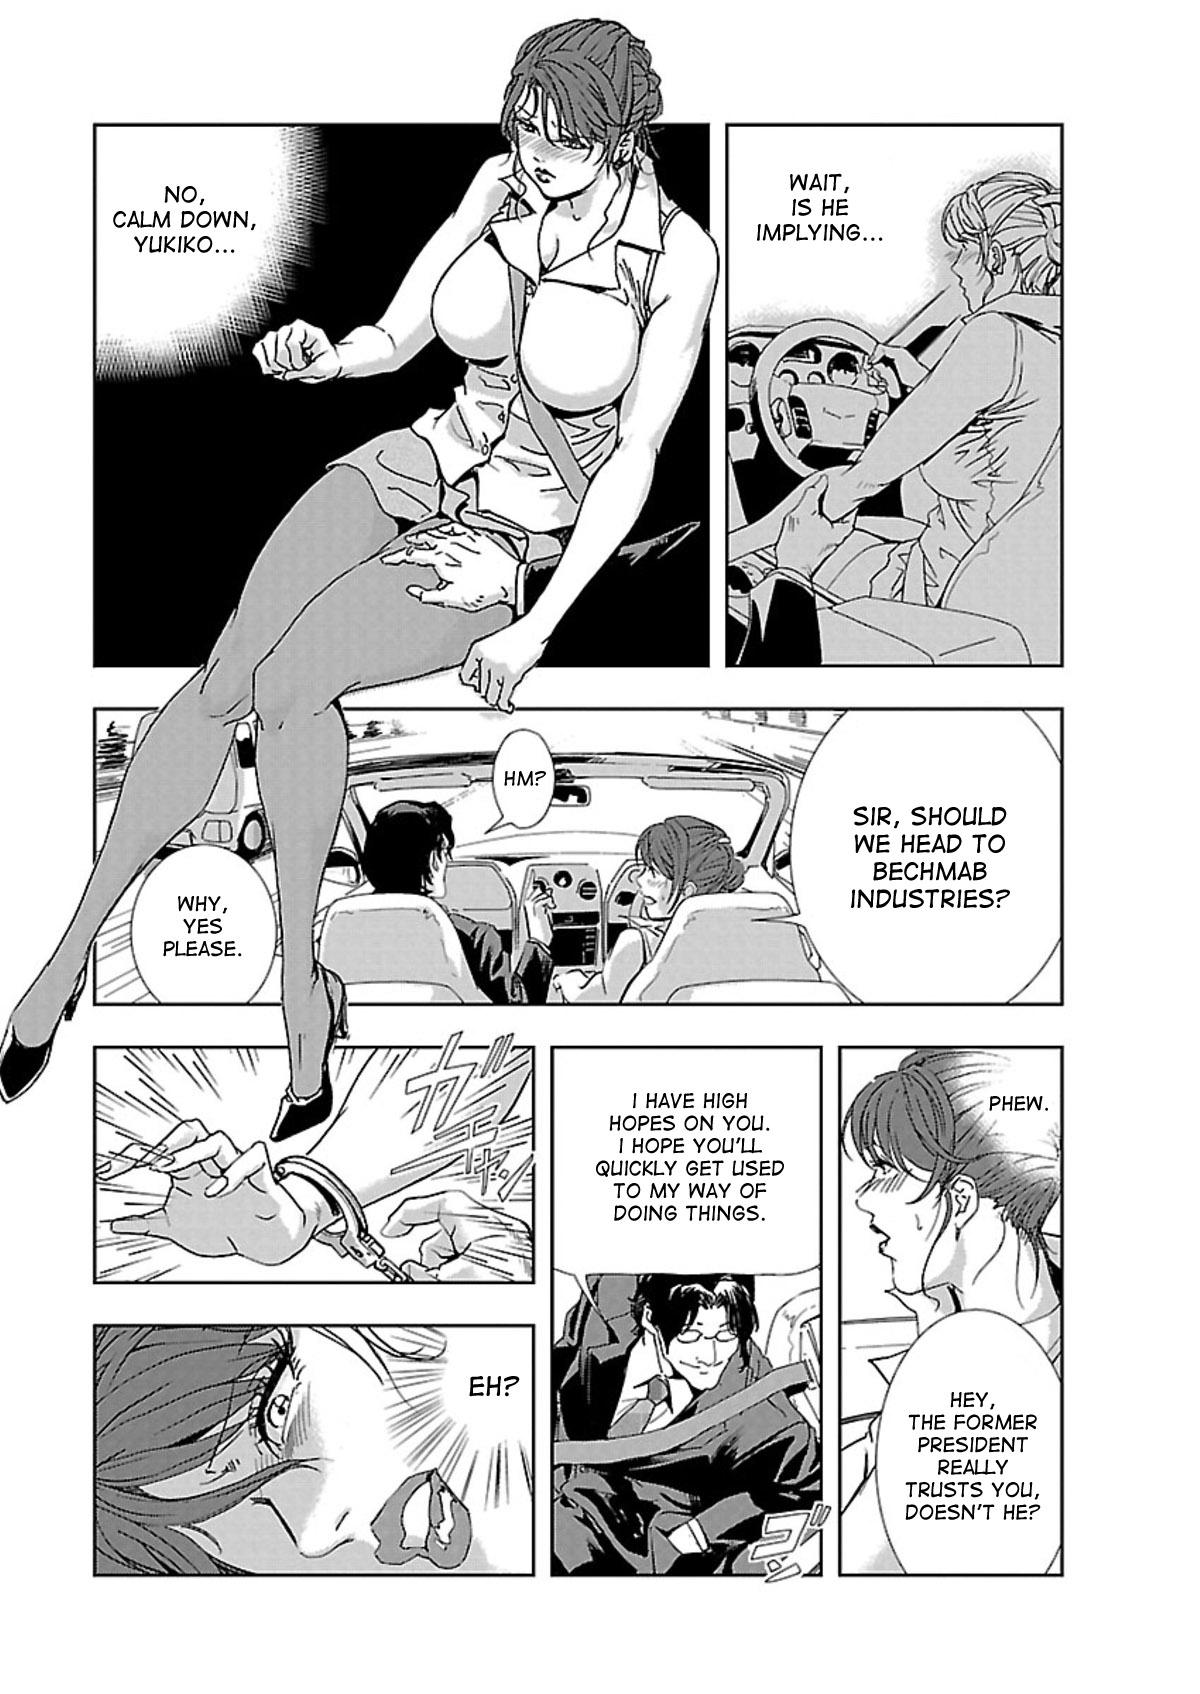 Funny Nikuhisyo Yukiko Viet Nam - Page 8